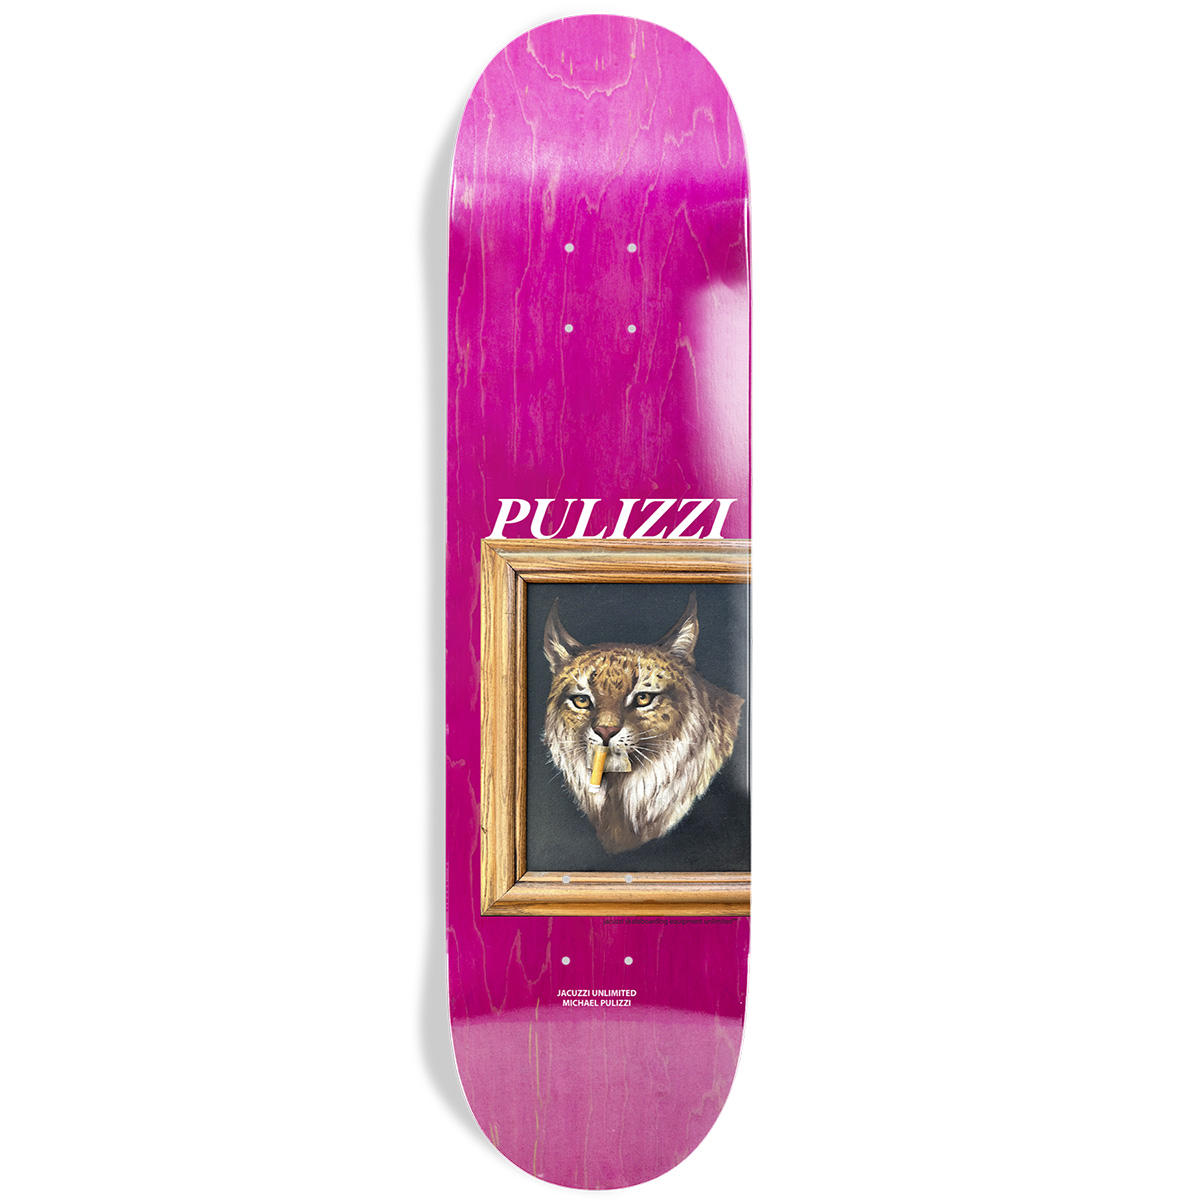 Jacuzzi Michael Pulizzi Bobcat Skateboard Deck 8.375